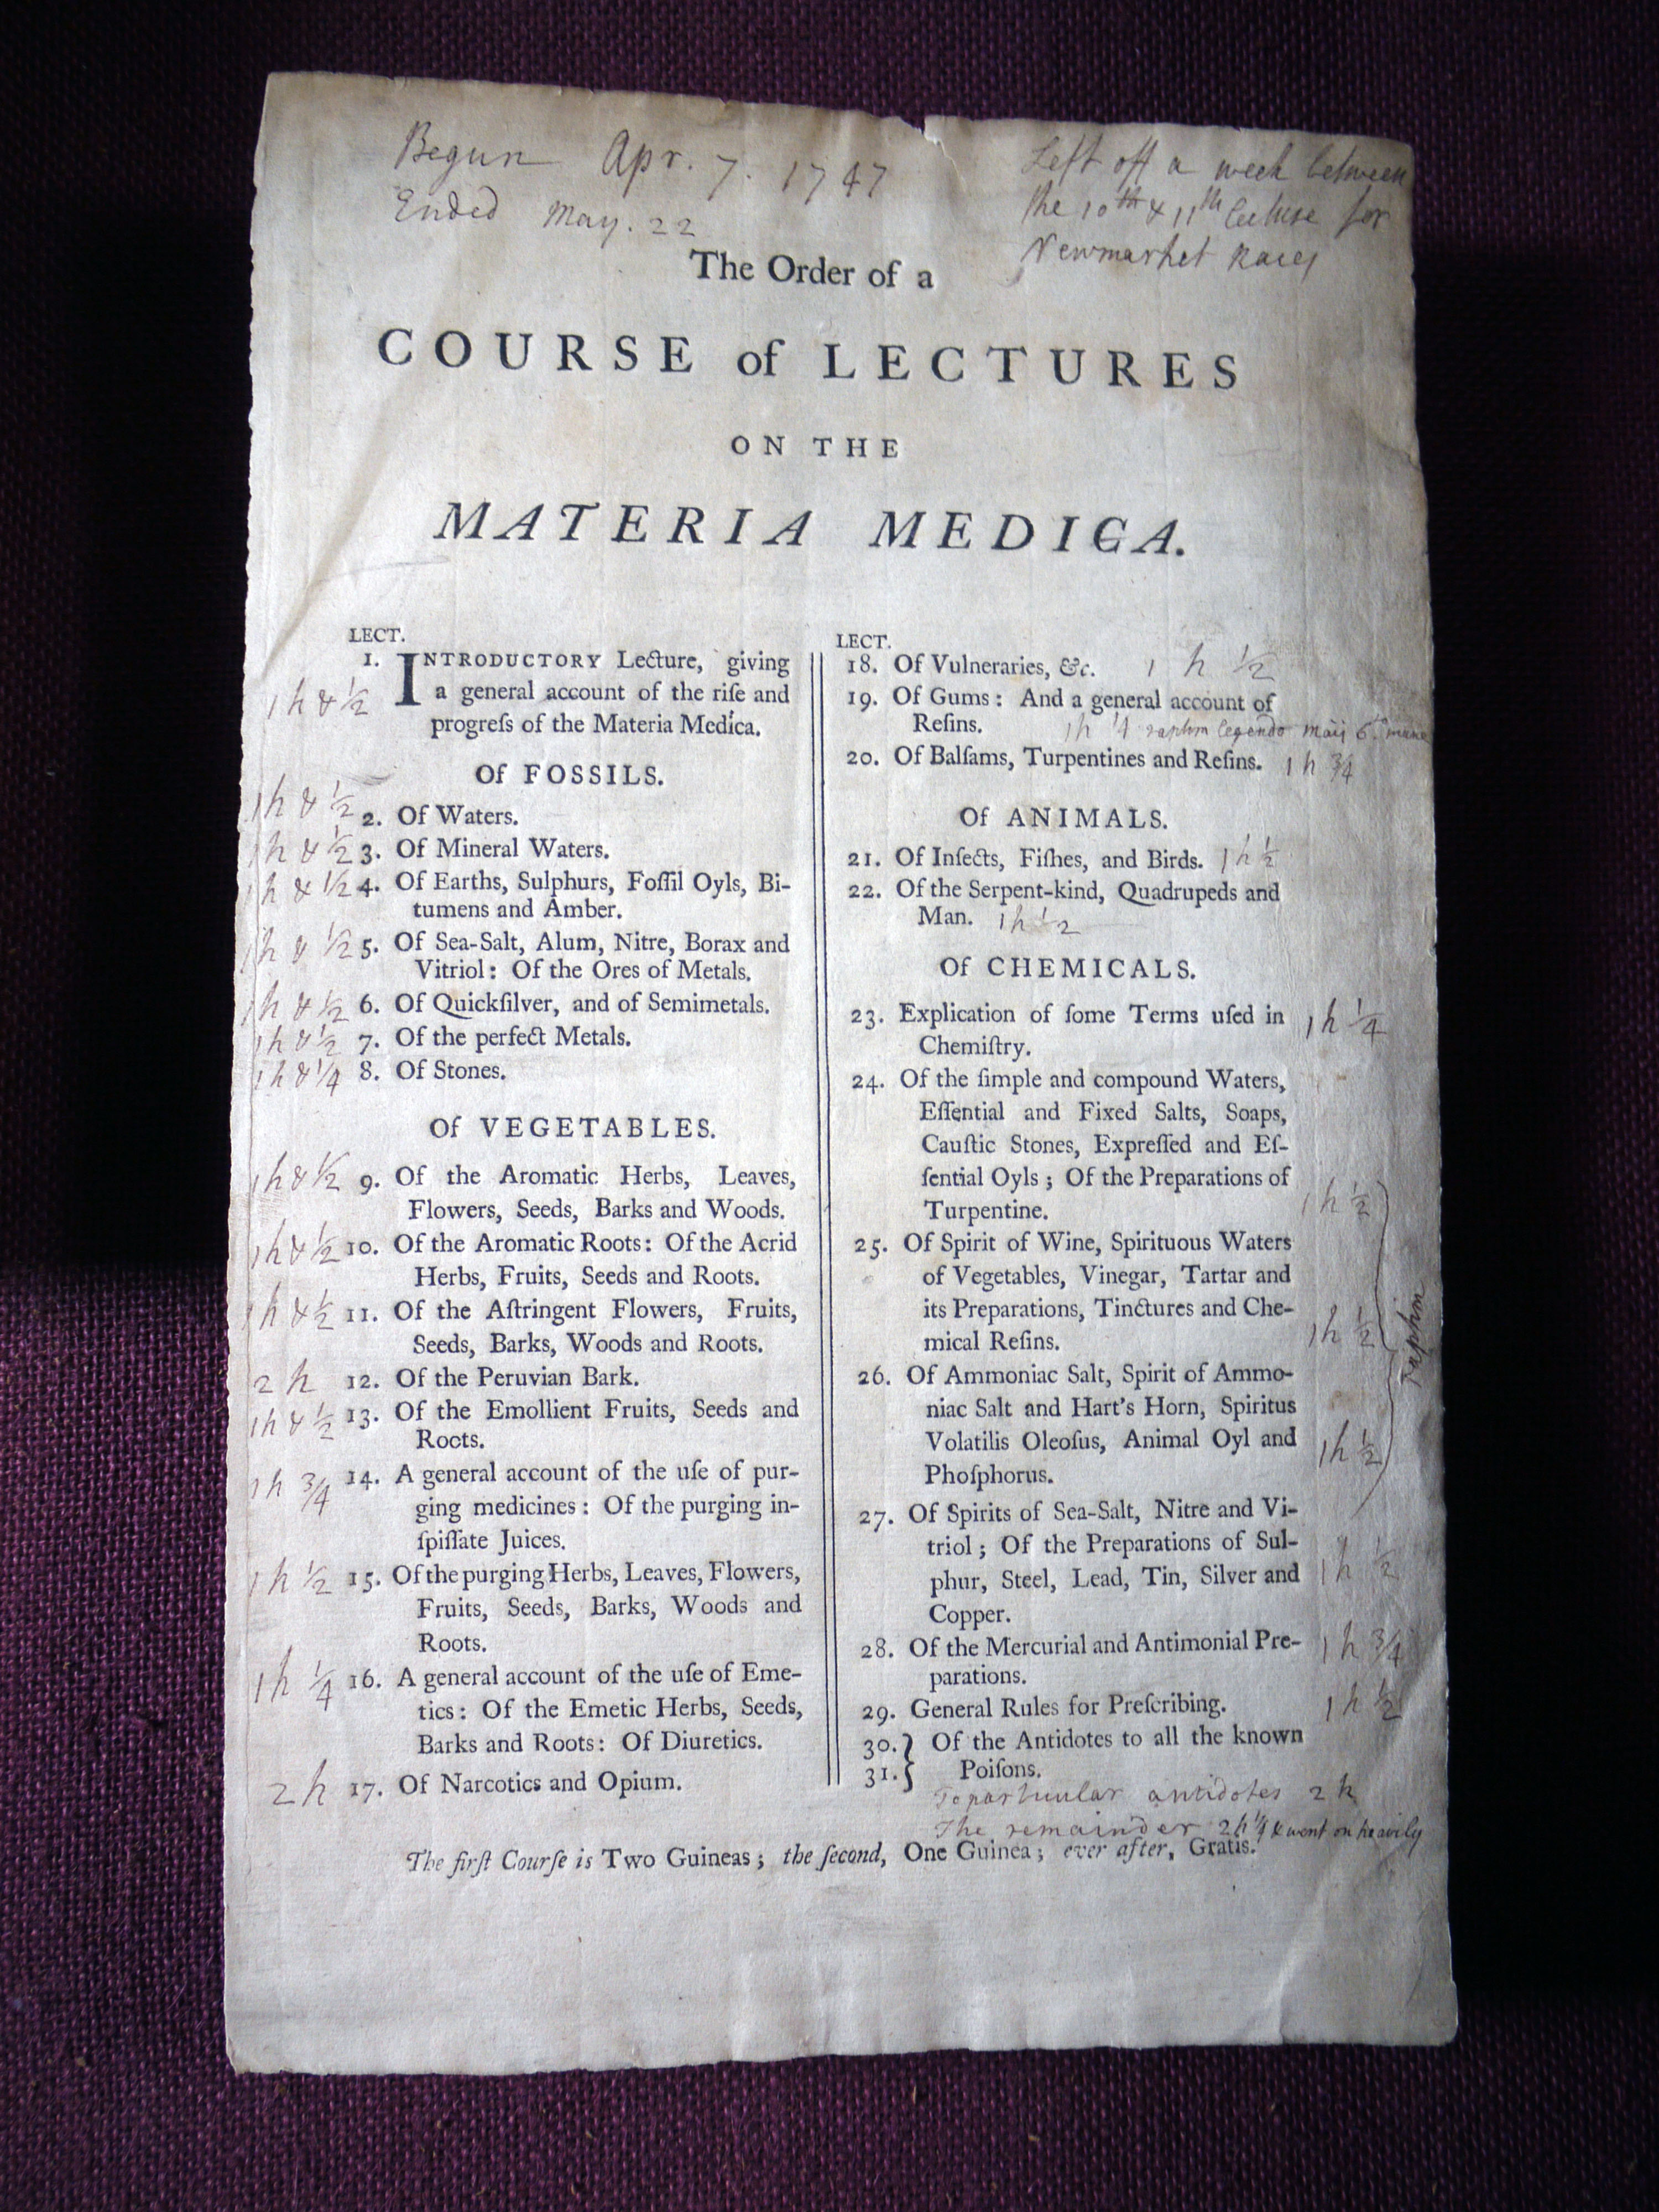 Heberden's lecture list